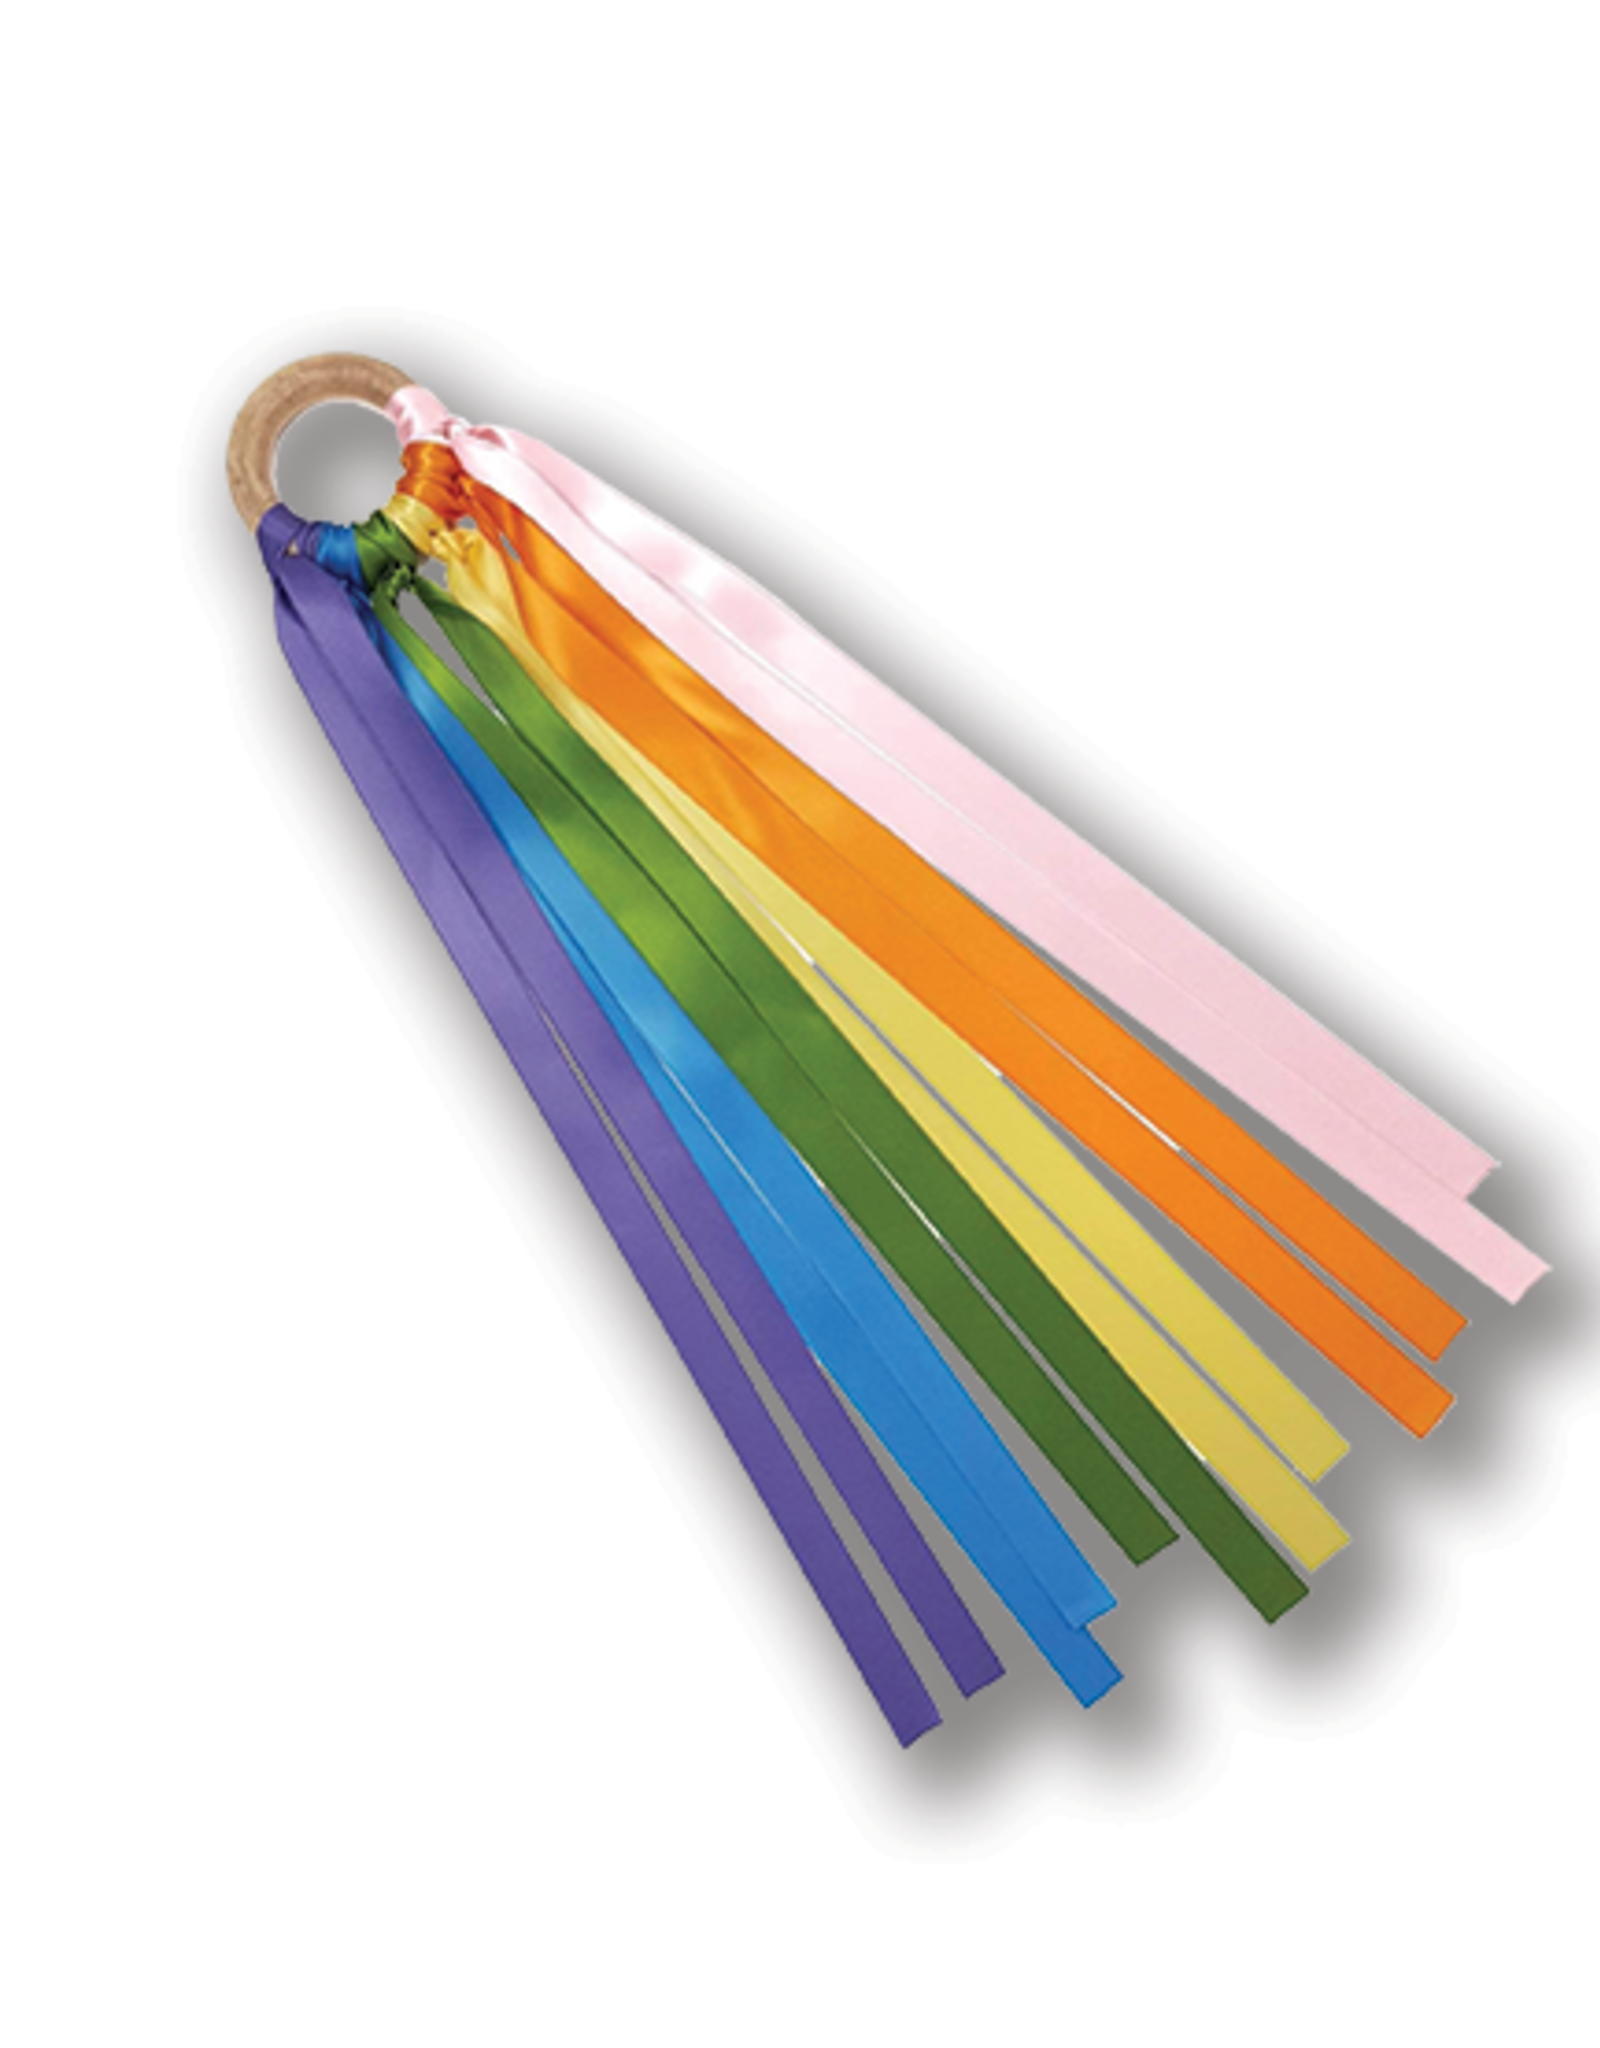 Pastel Rainbow Hand Kite